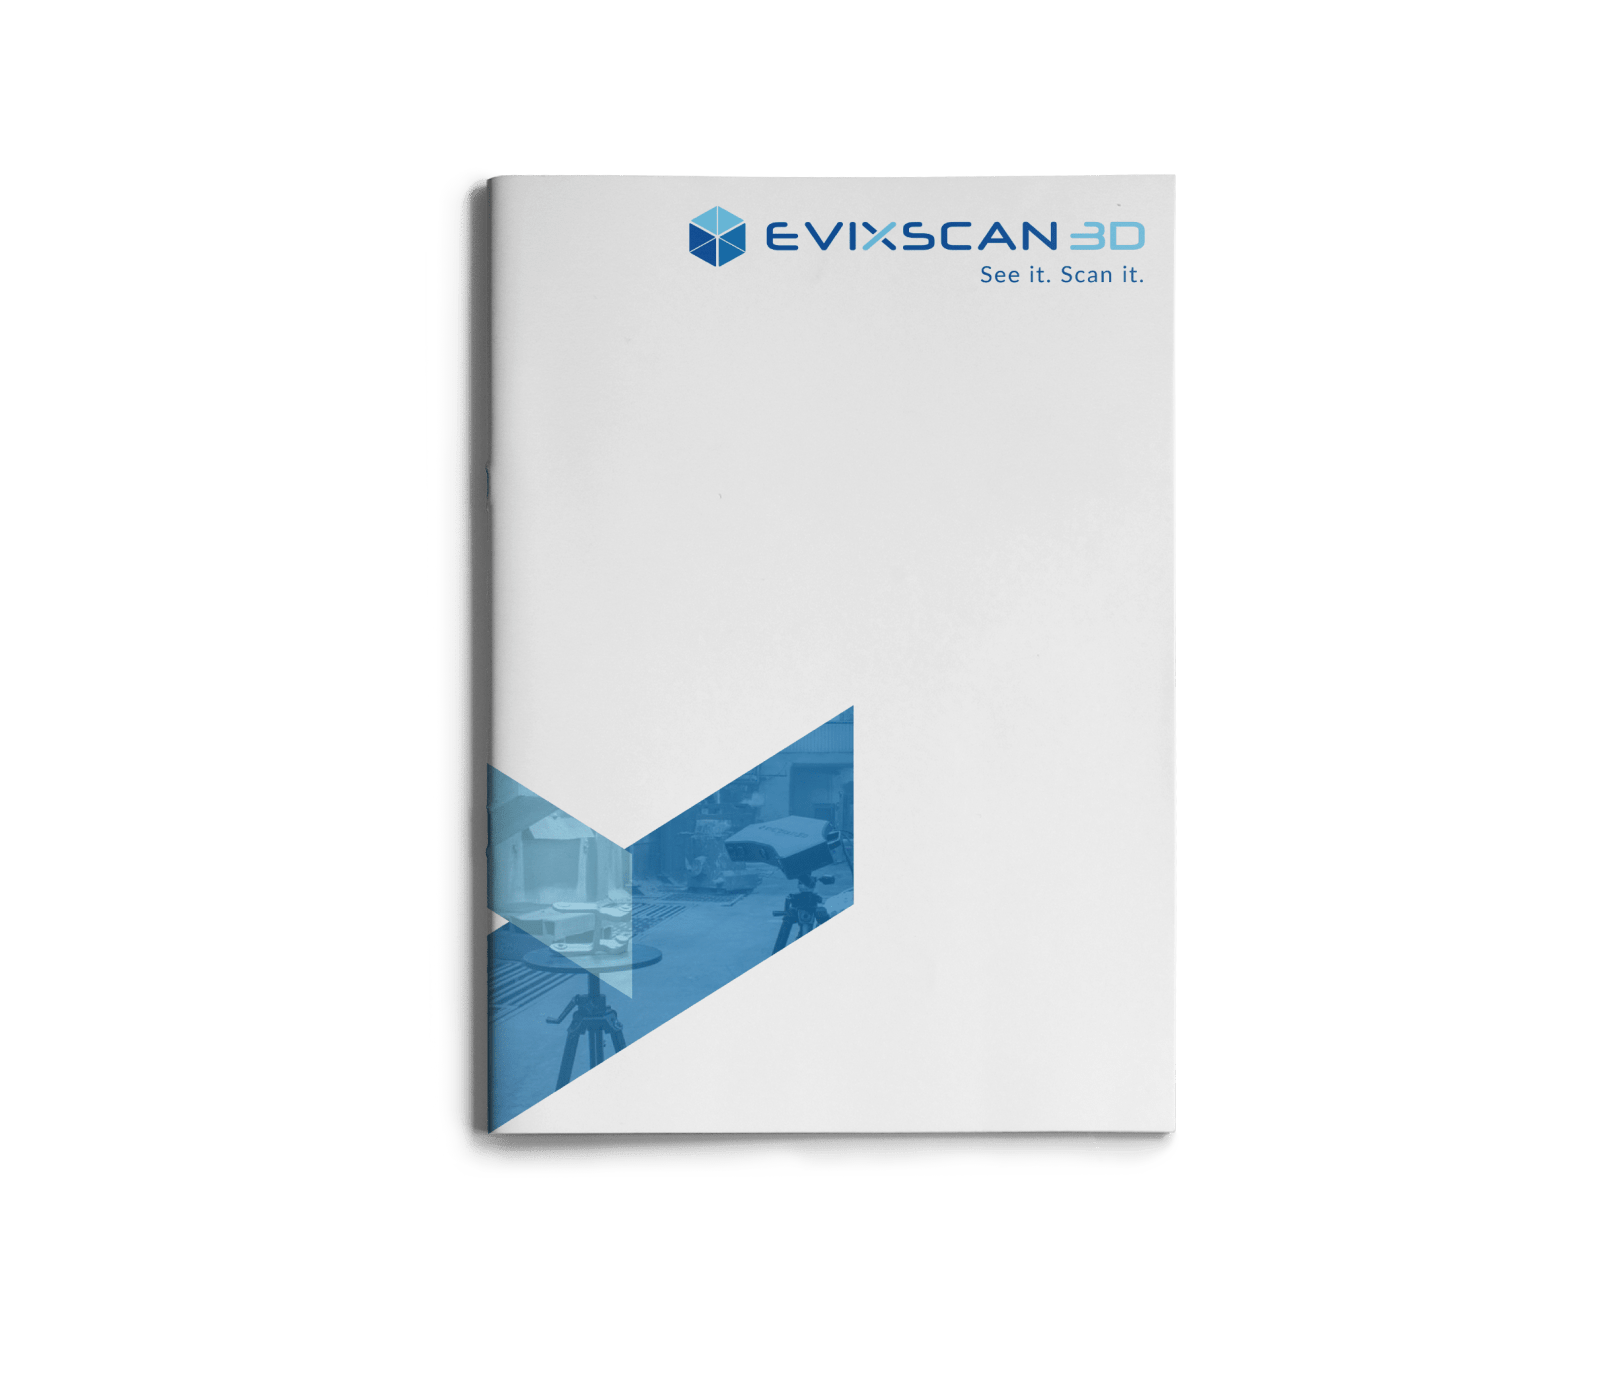 evixscan 3d foldery reklamowe (4)